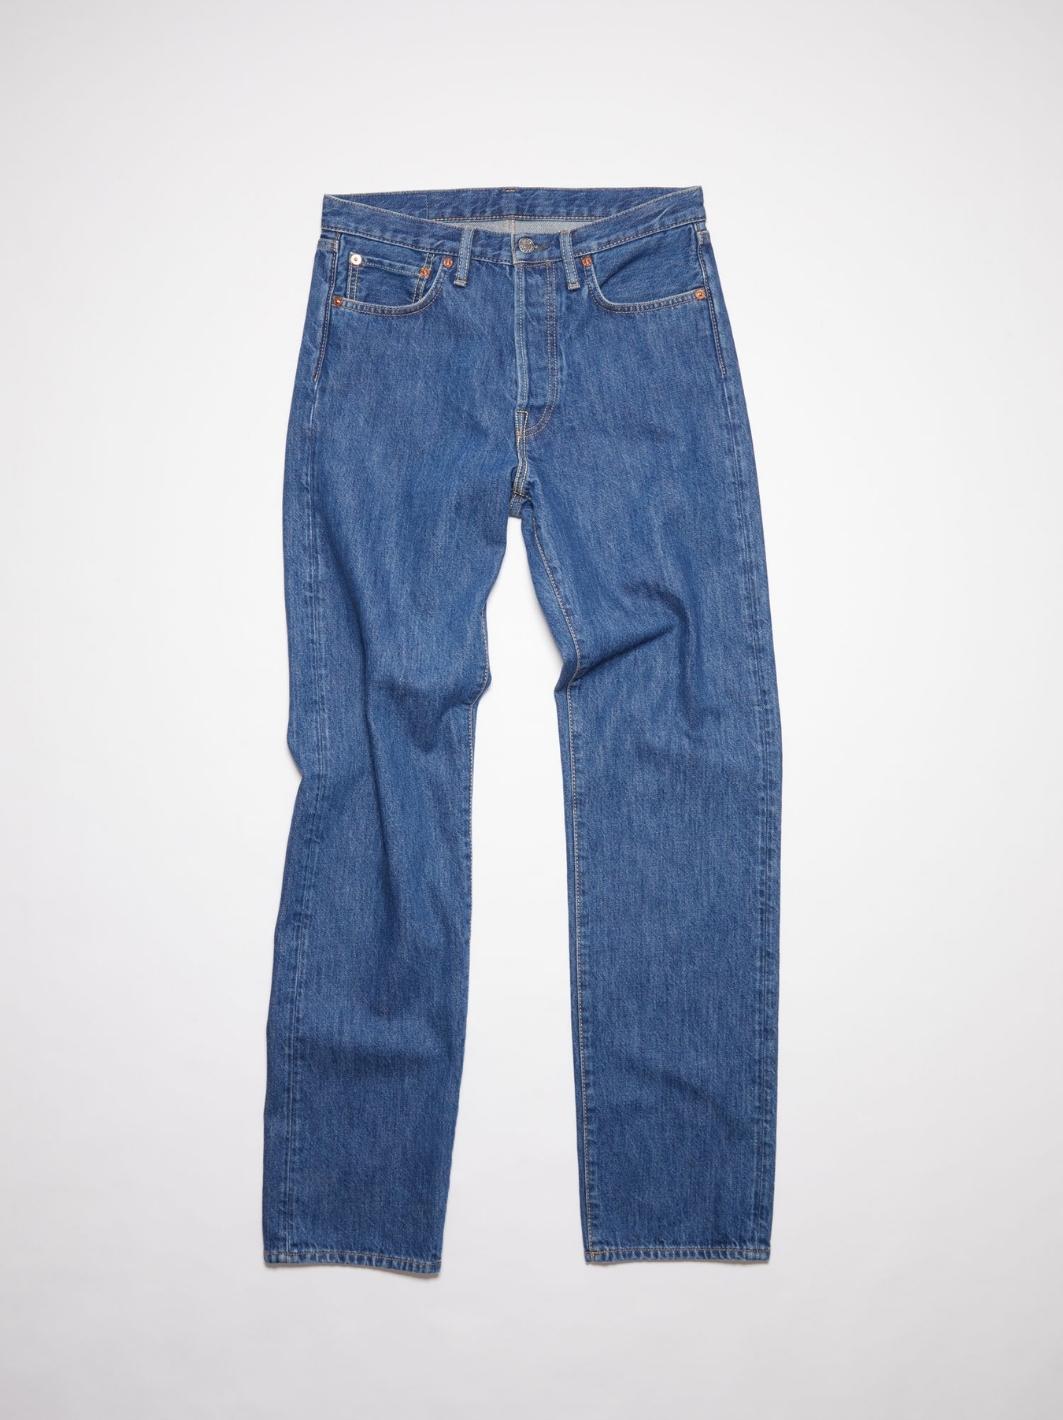 Acne Studios Jeans Jeans | 1996 Straight Fit Jeans Dark Blue Trash